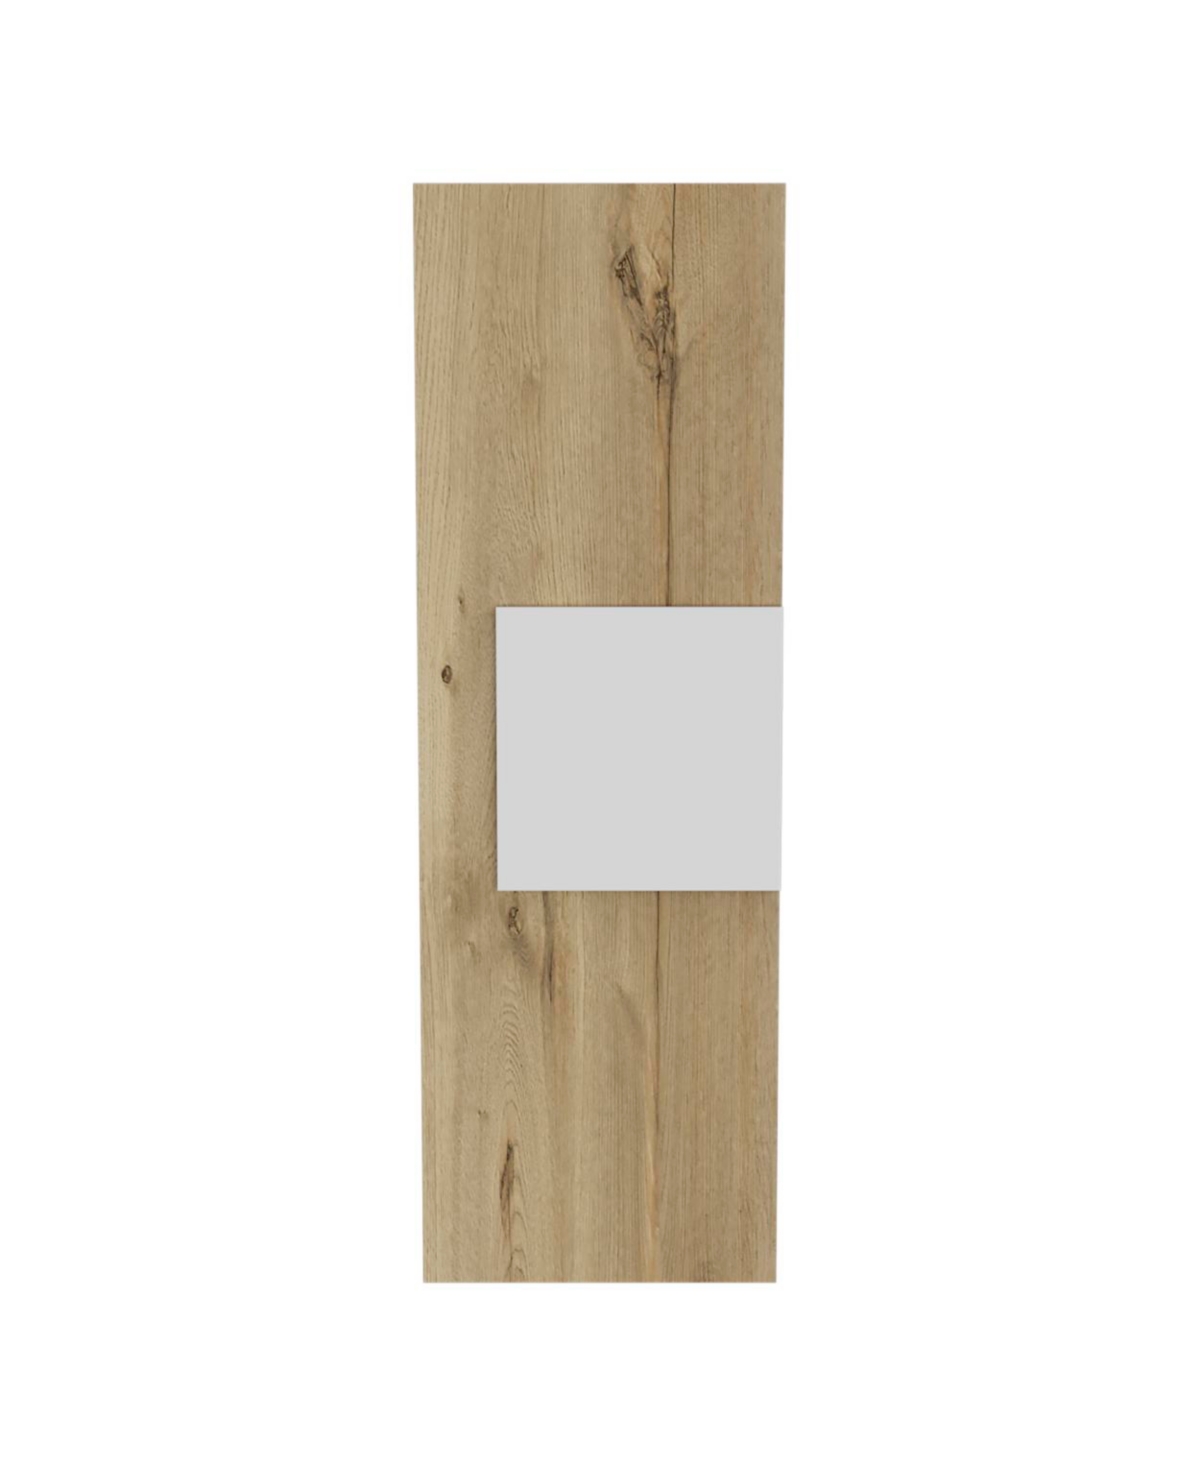 Bridgewater 3-Shelf Rectangle Medicine Cabinet Light Oak And White - Beige/khaki